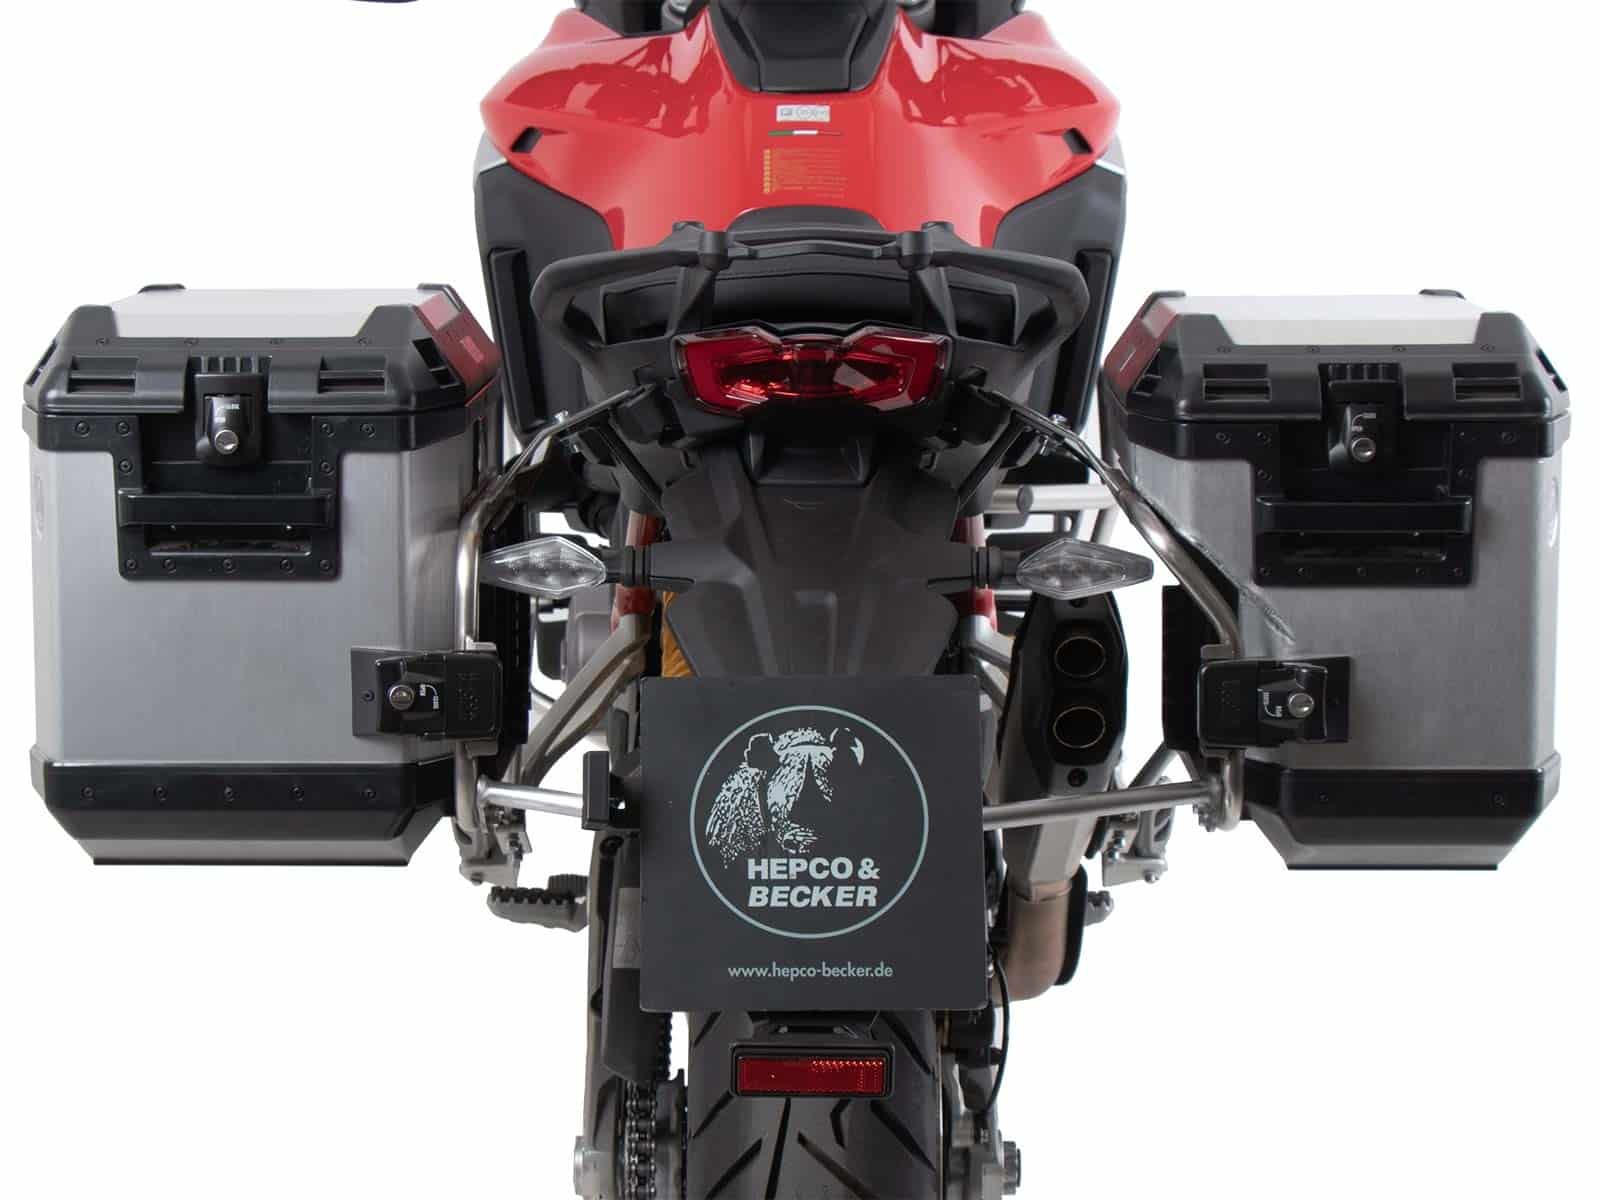 Kofferträgerset Cutout Edelstahl inkl. Xplorer Cutout silber Kofferset für Ducati Multistrada V4 / S / S Sport (2021-)